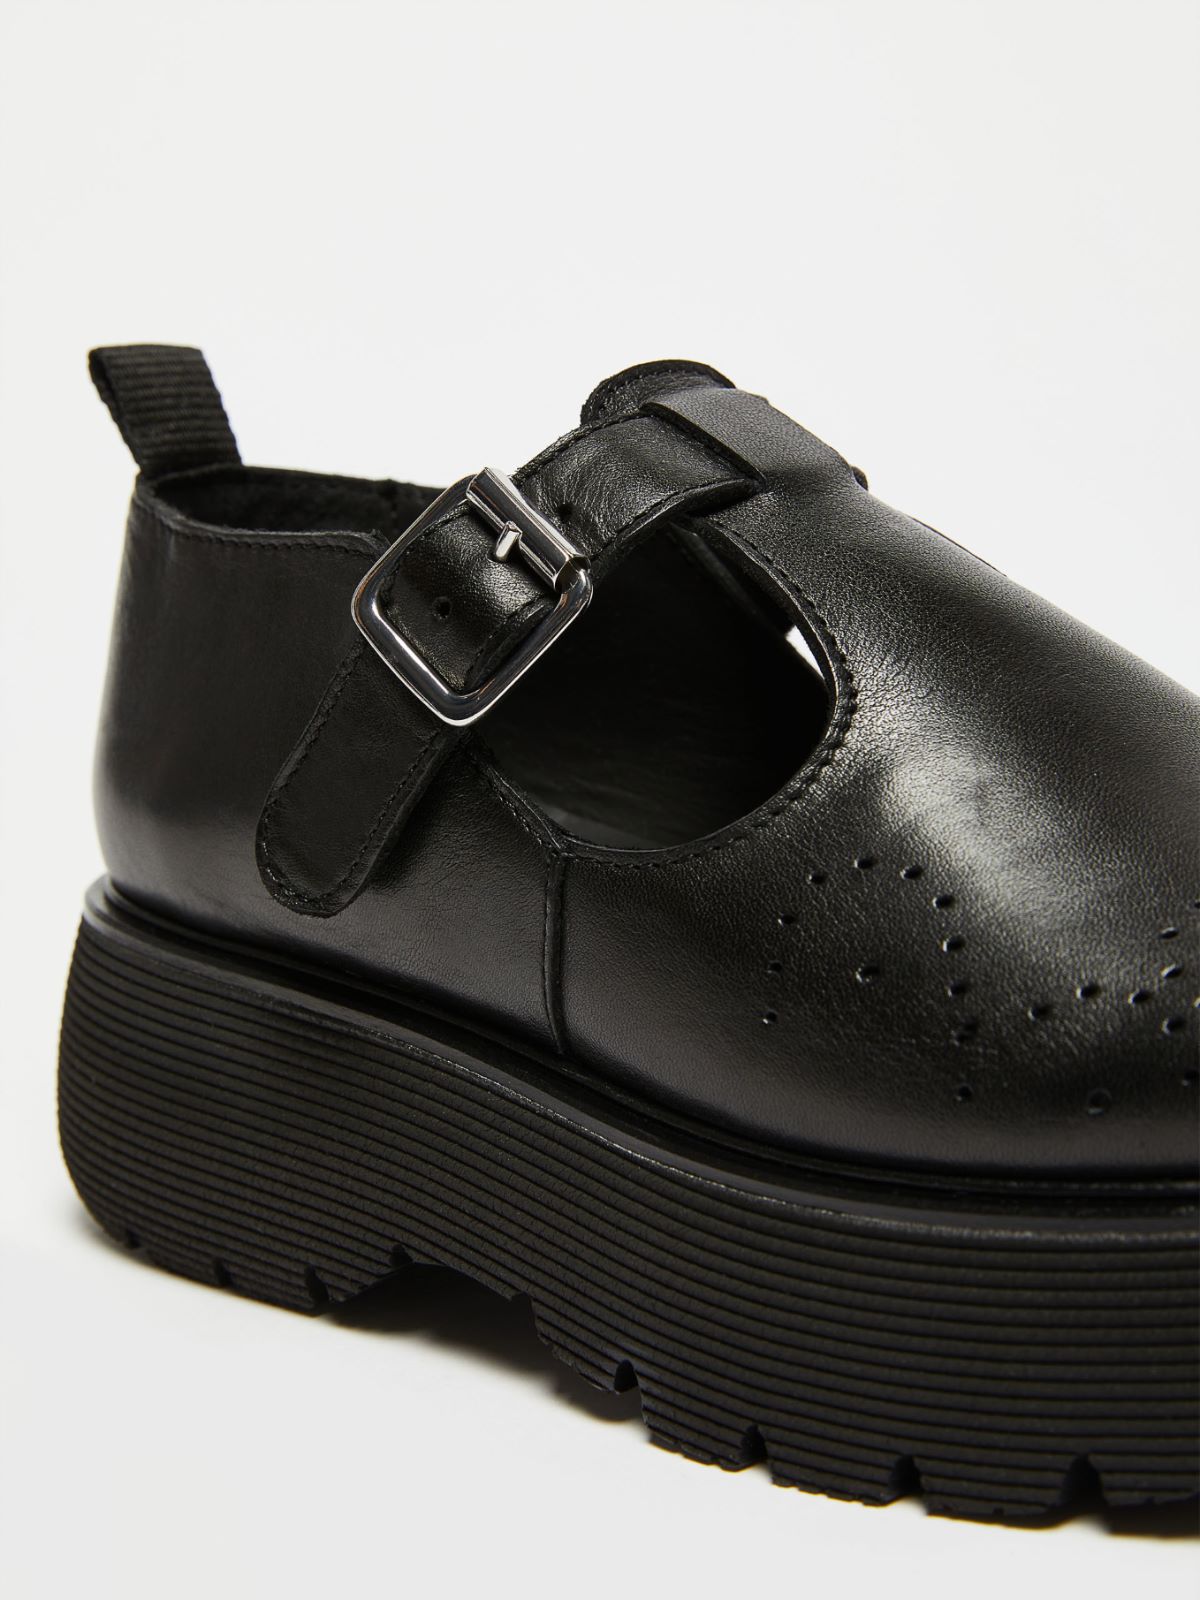 Leather Mary Jane shoes - BLACK - Weekend Max Mara - 4